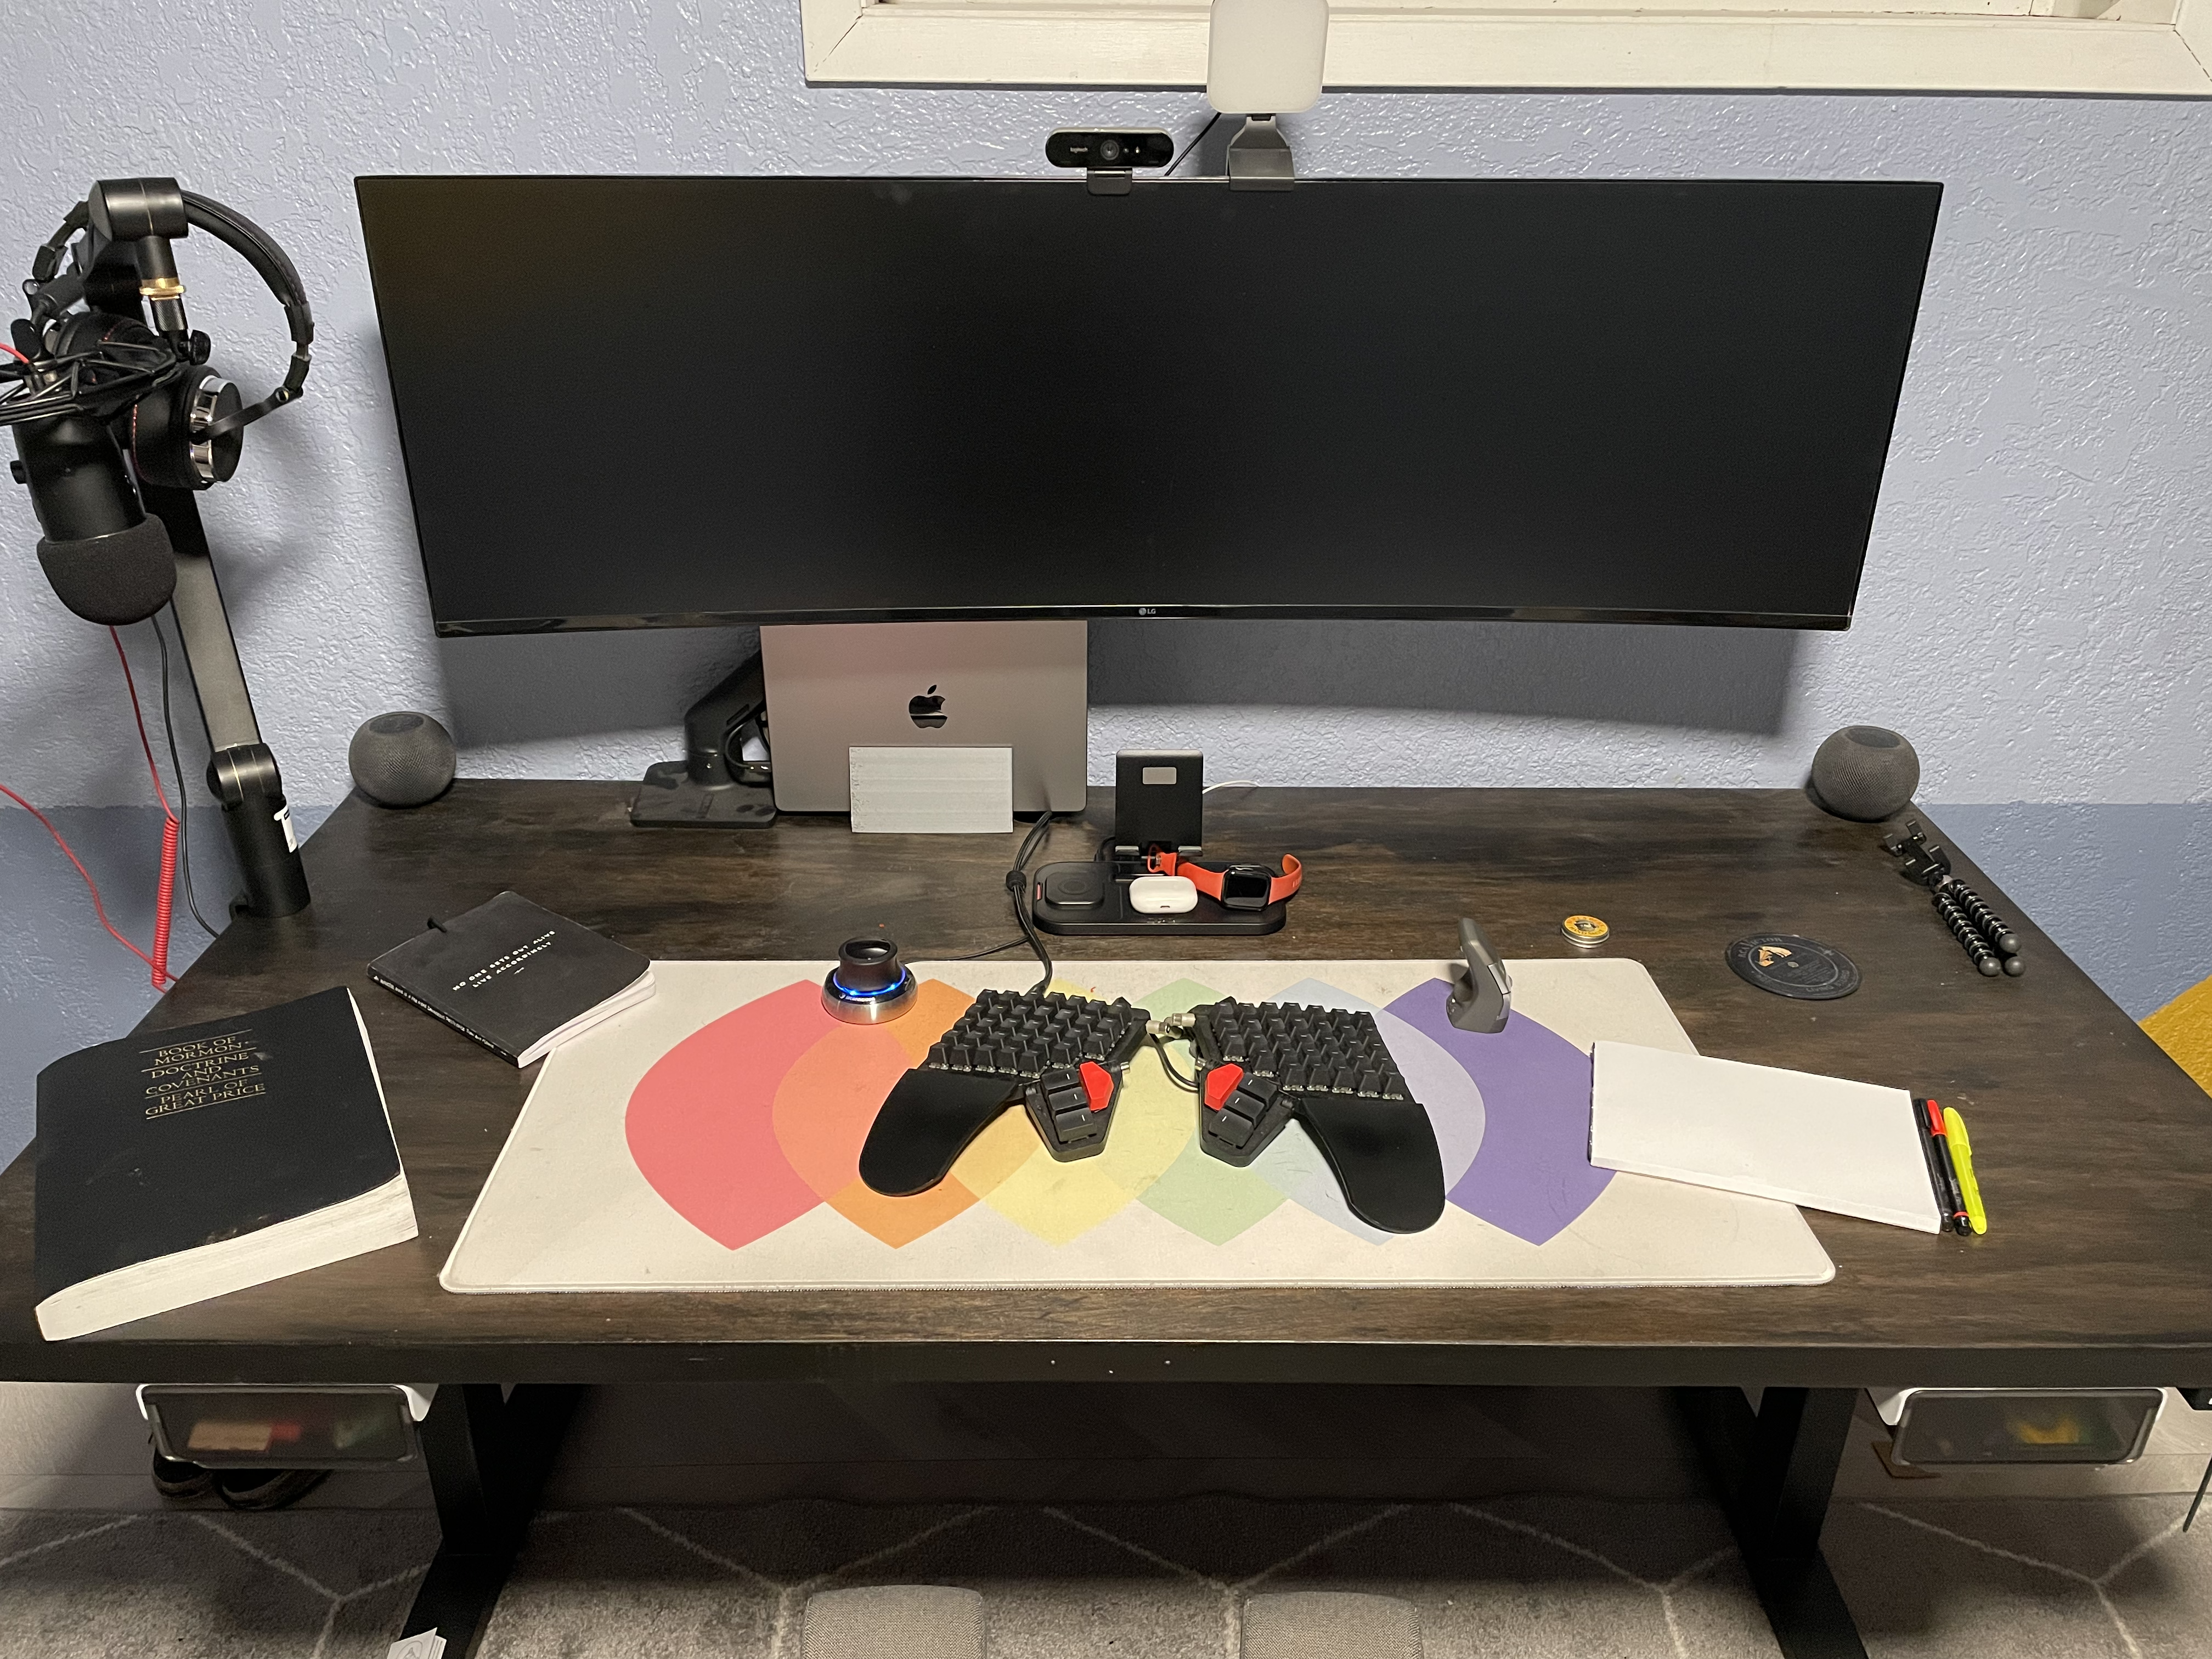 My desk setup as of 03 Mar 2023